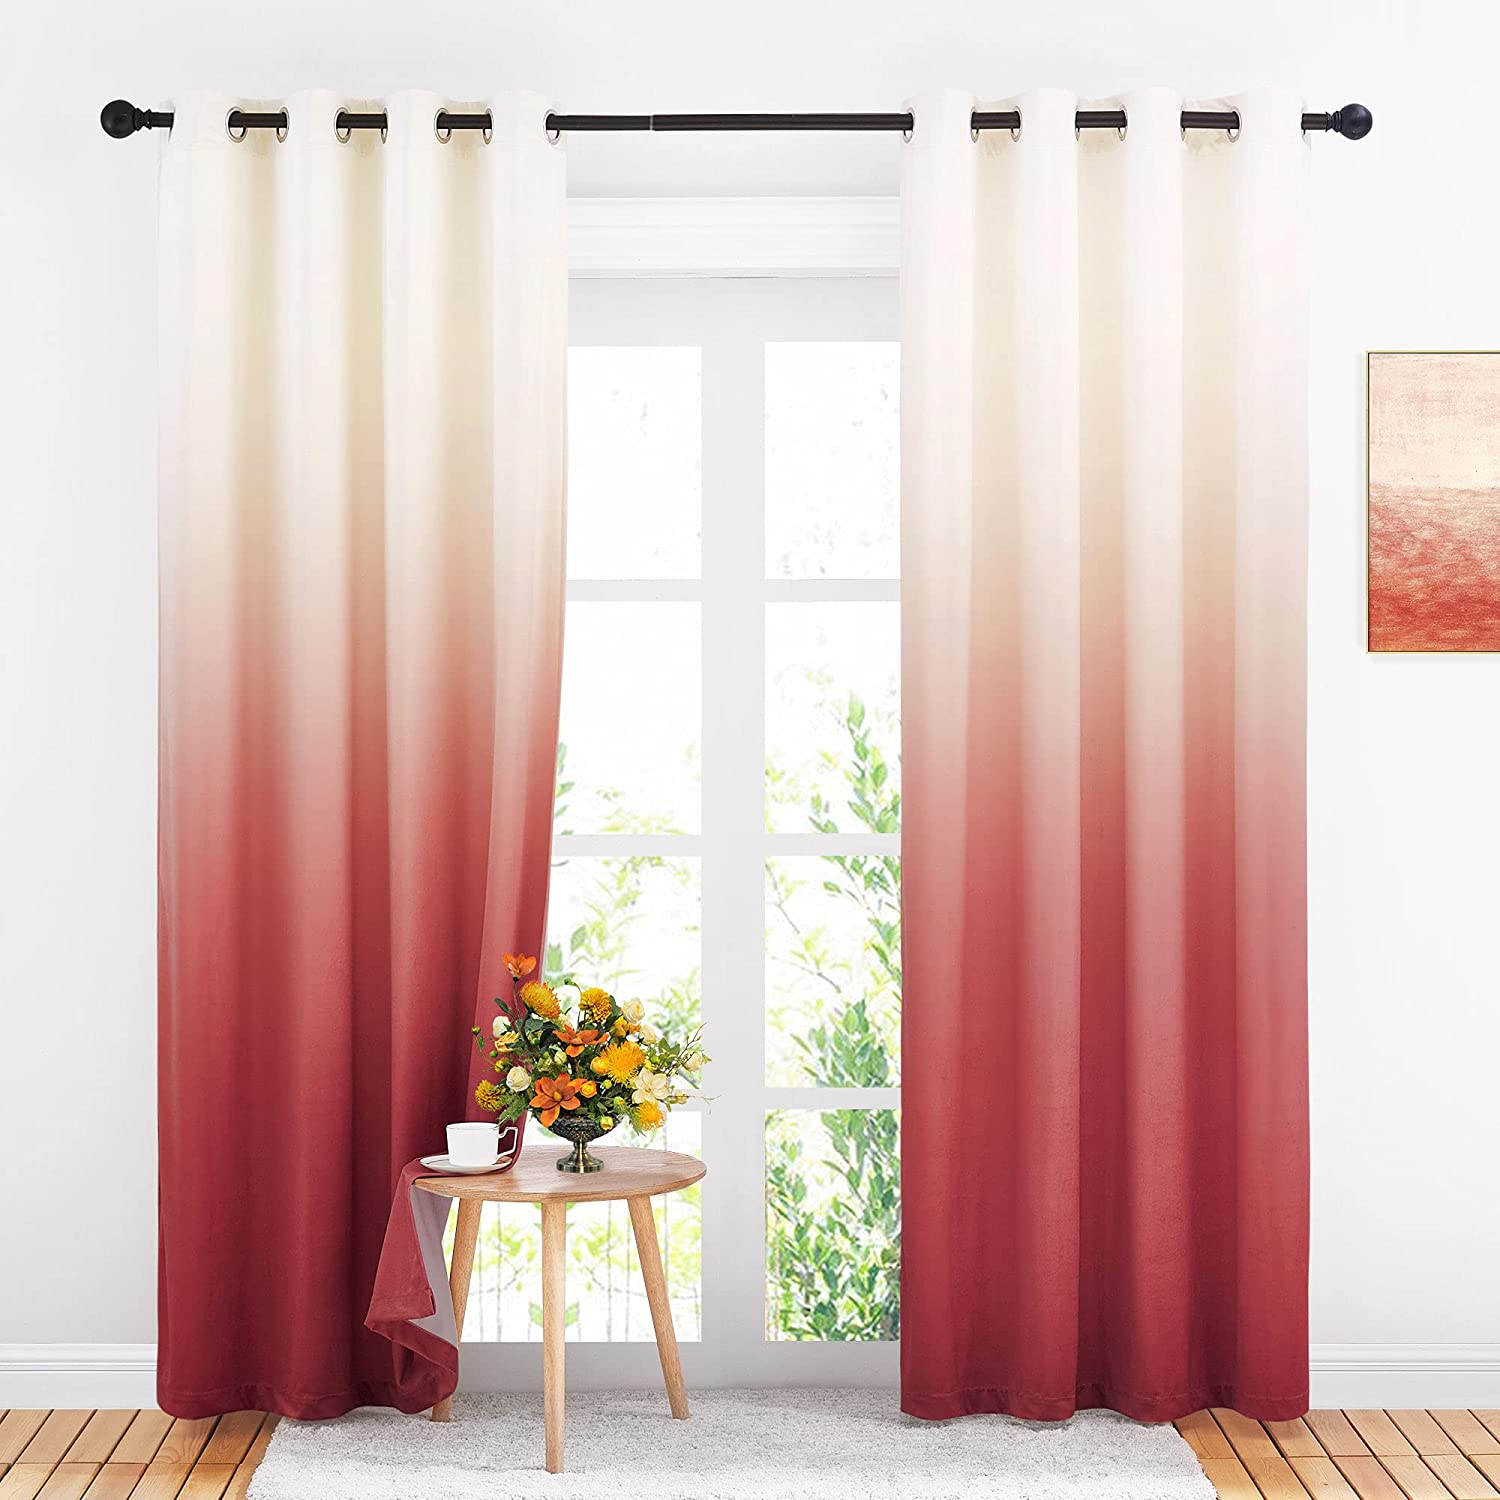 Grommet Velvet  Blackout Ombre Curtains For Living Room And Bedroom 2 Panels KGORGE Store